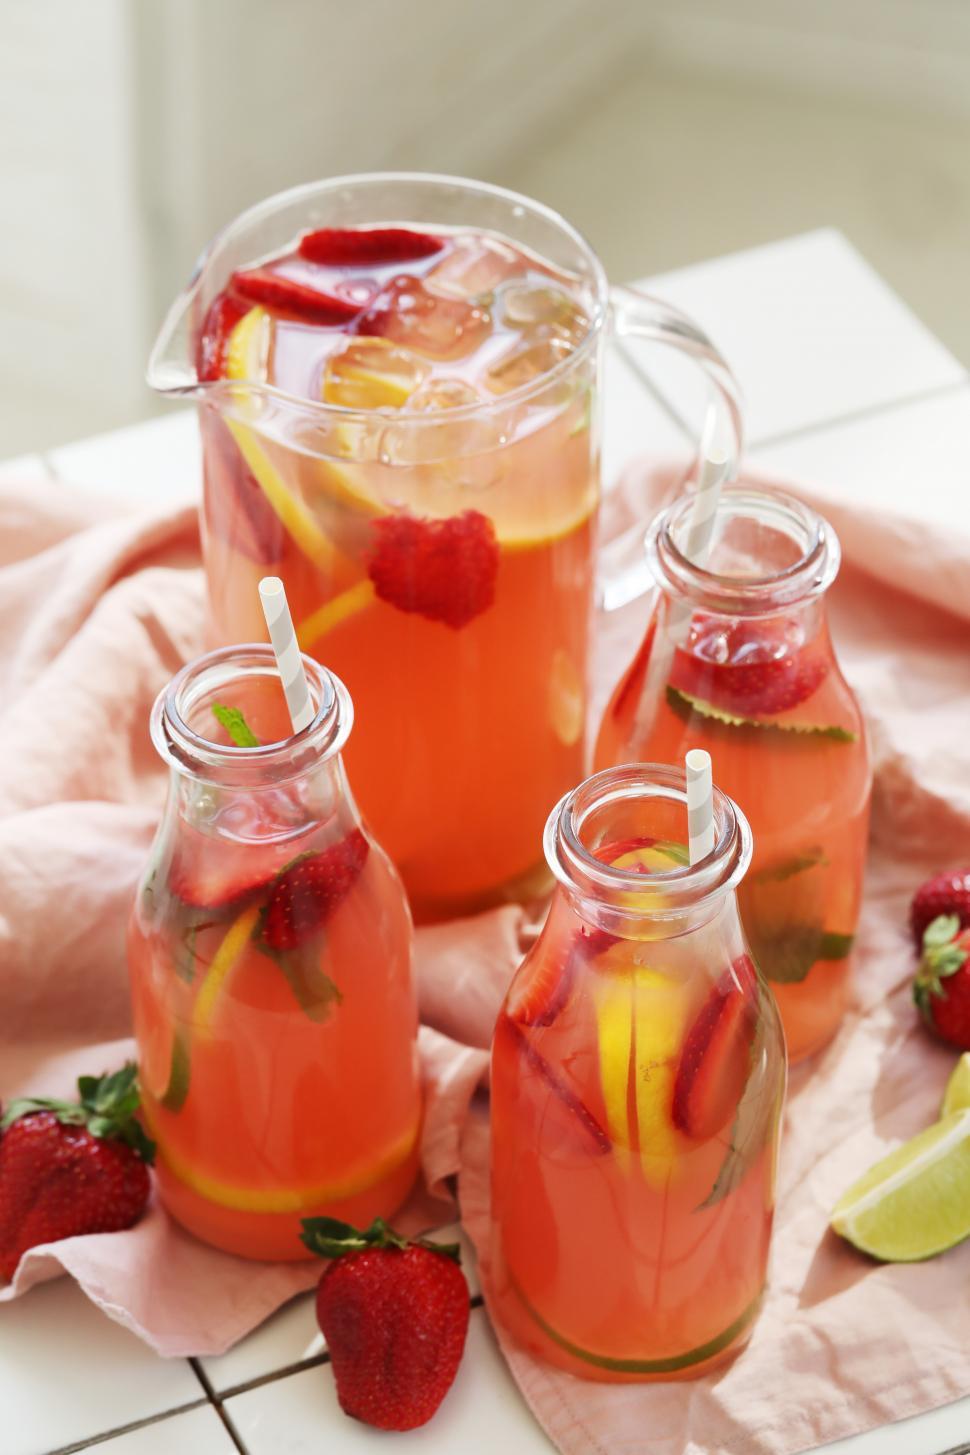 Free Image of Refreshing strawberry drink 